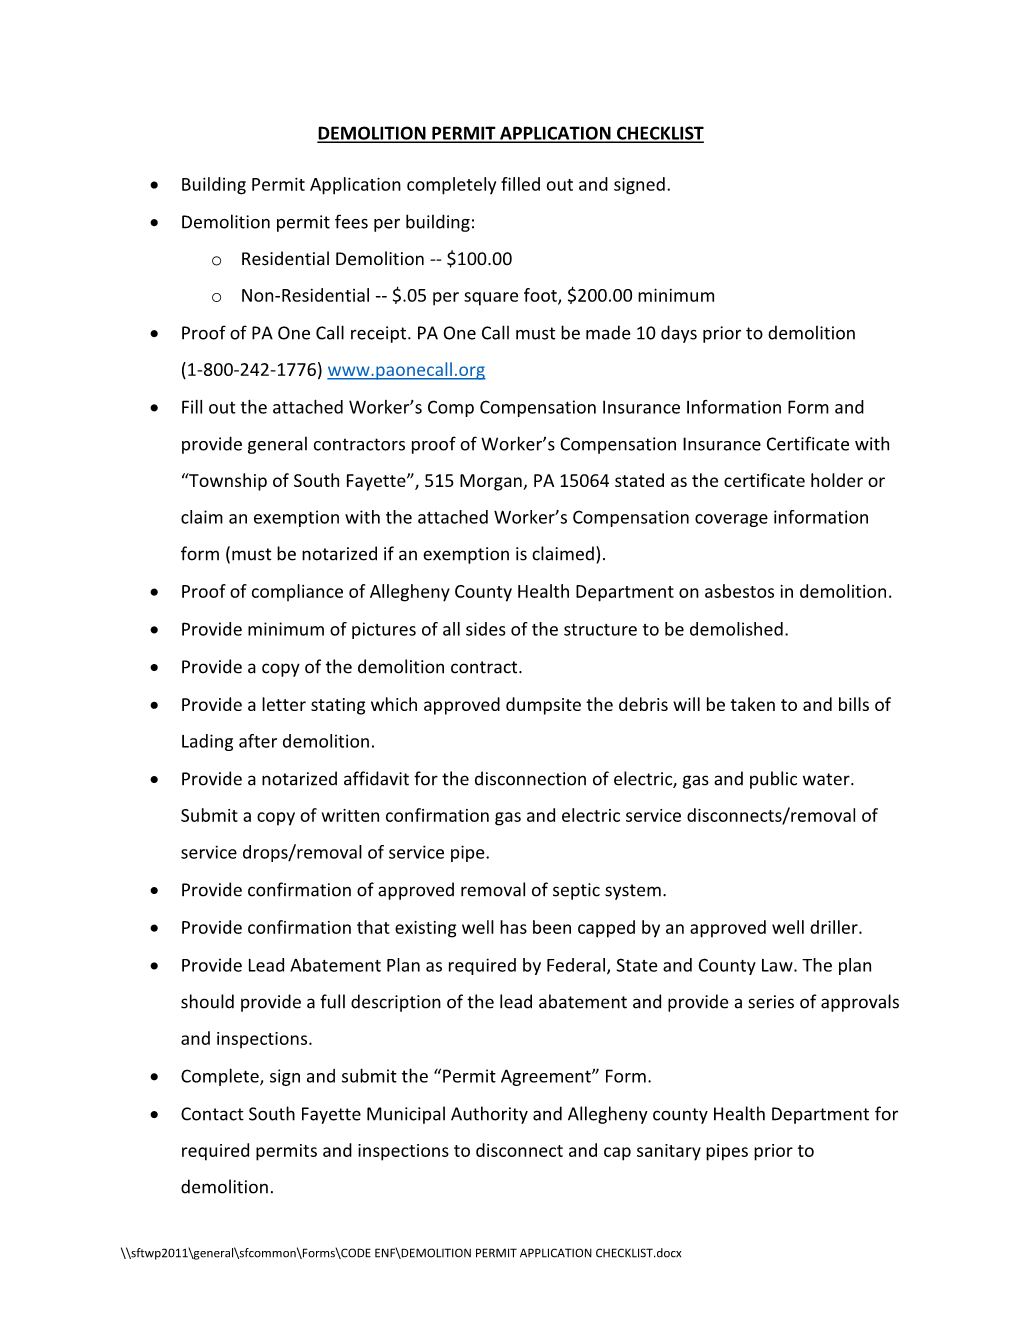 Demolition Permit Application and Checklist (PDF)